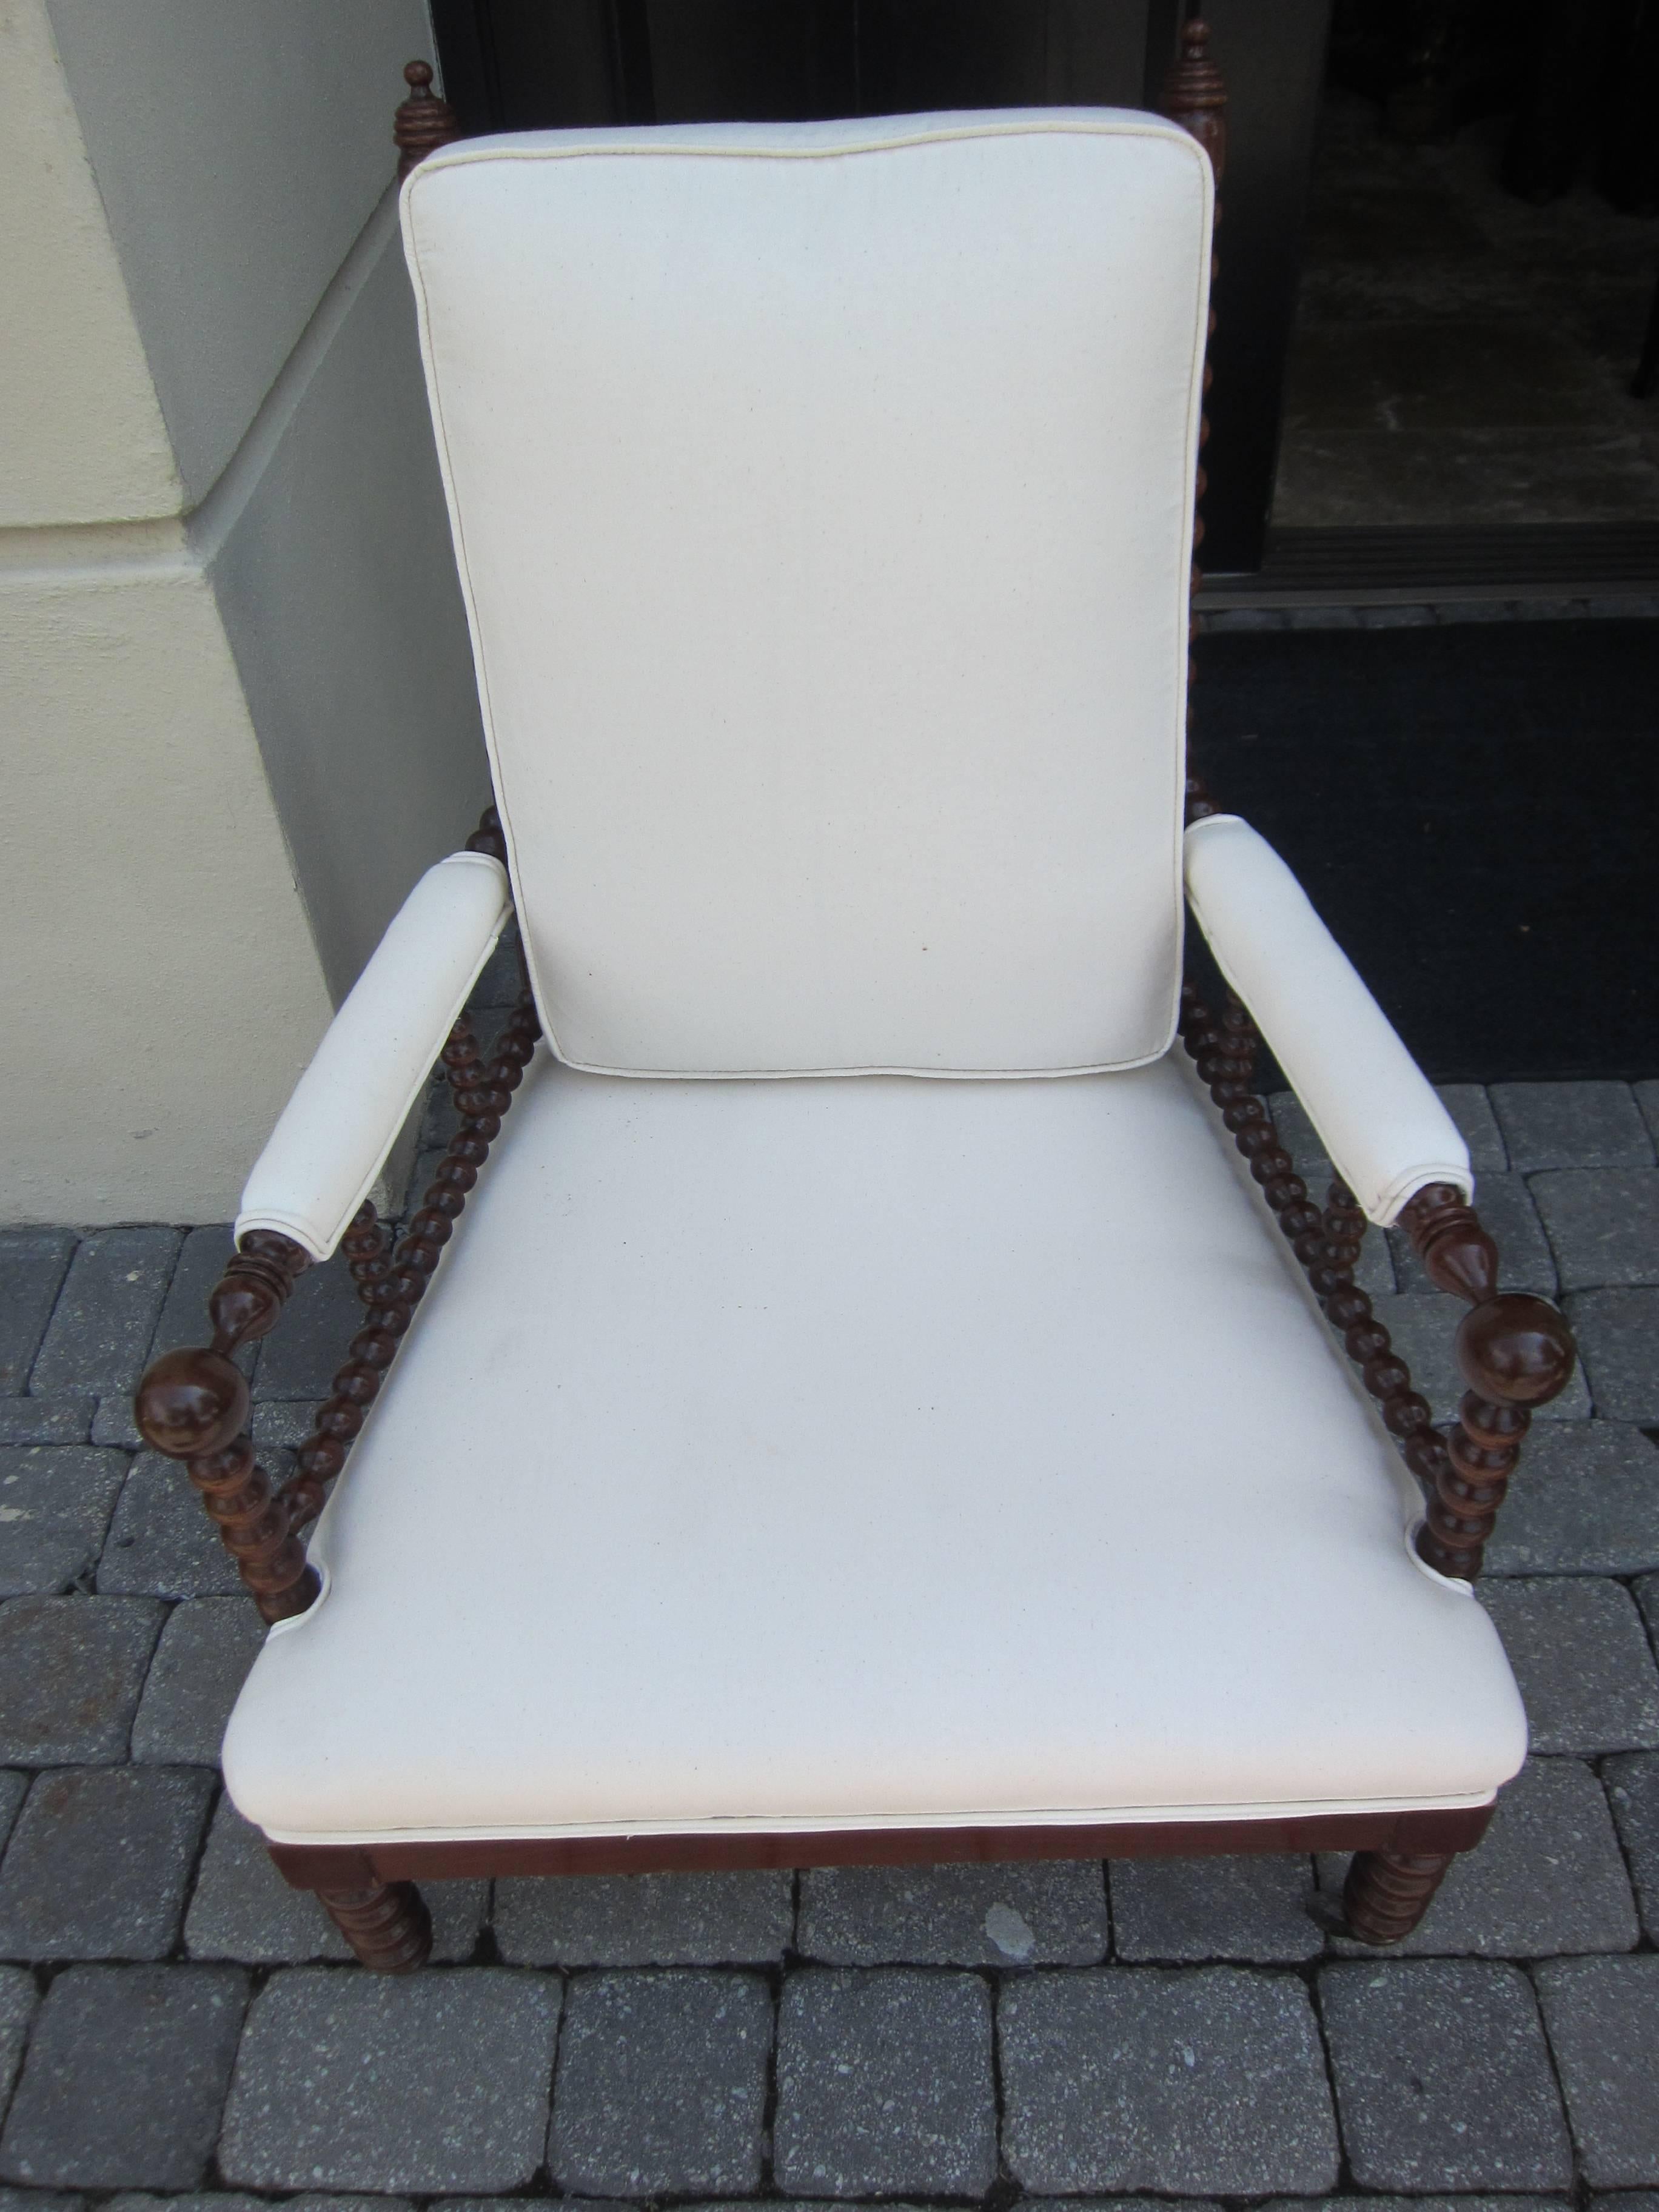 19th century Bobbin chair. Measures: 15